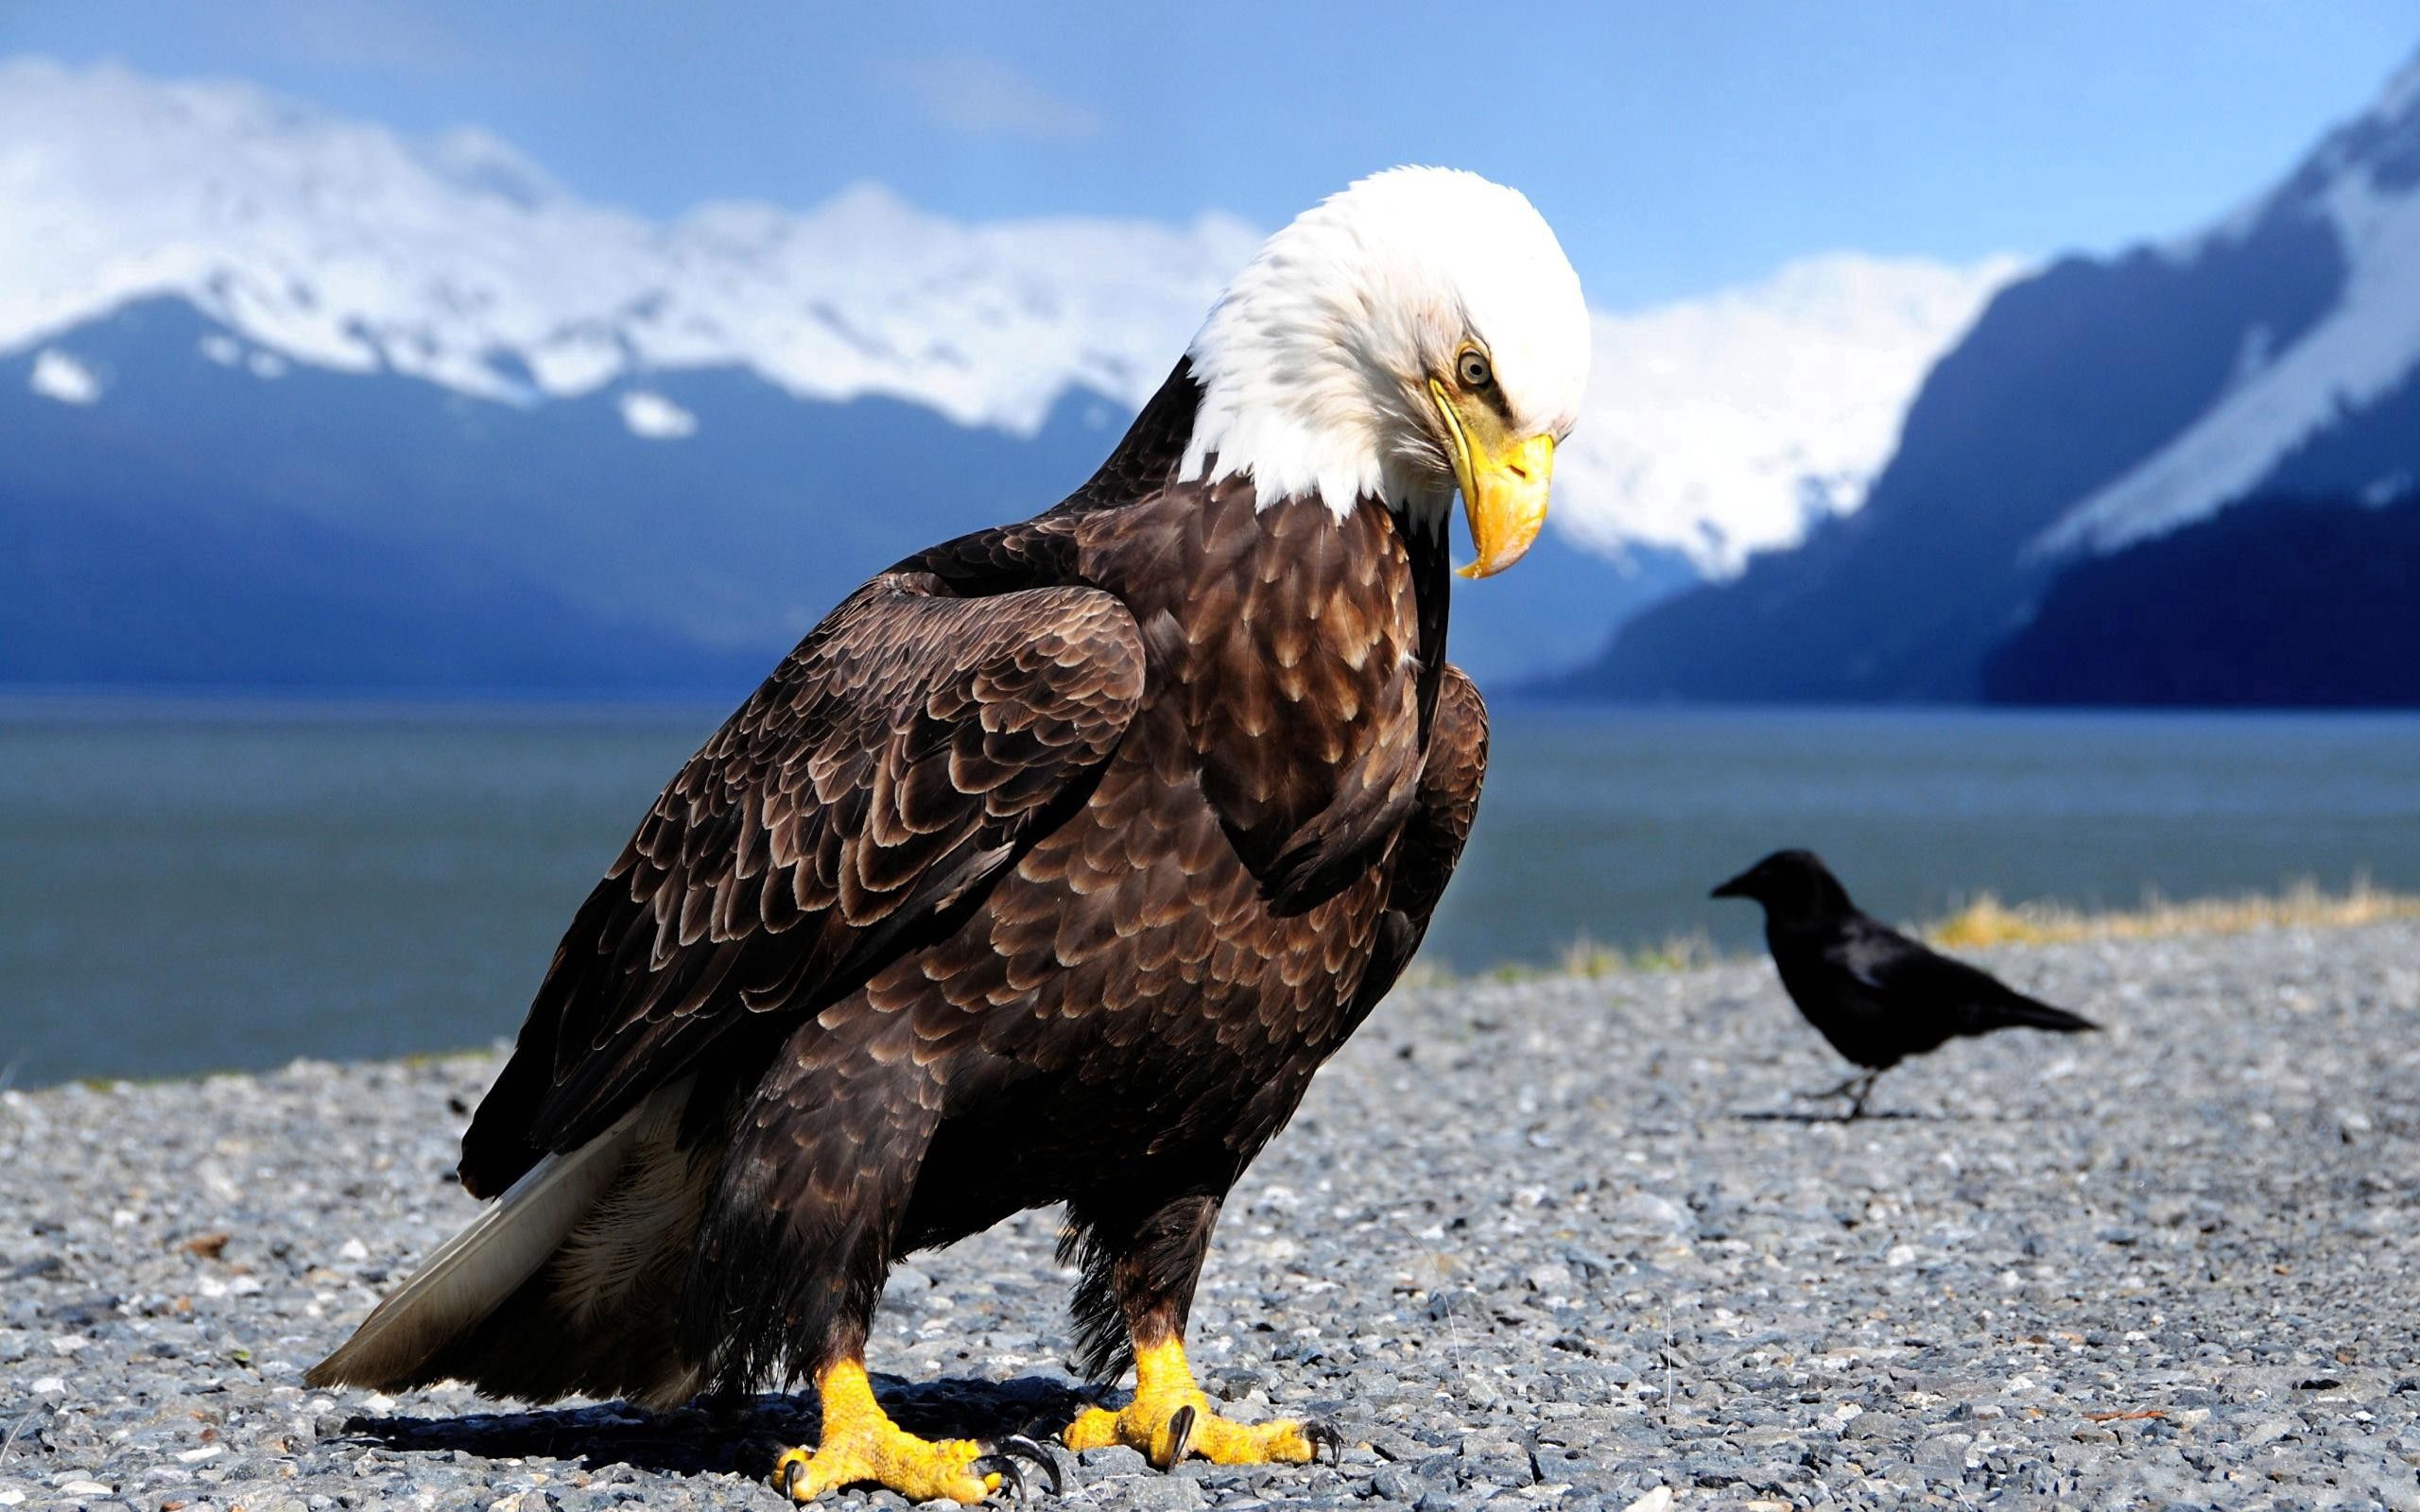 animals, eagle, birds, predator, bank, shore, crow lock screen backgrounds